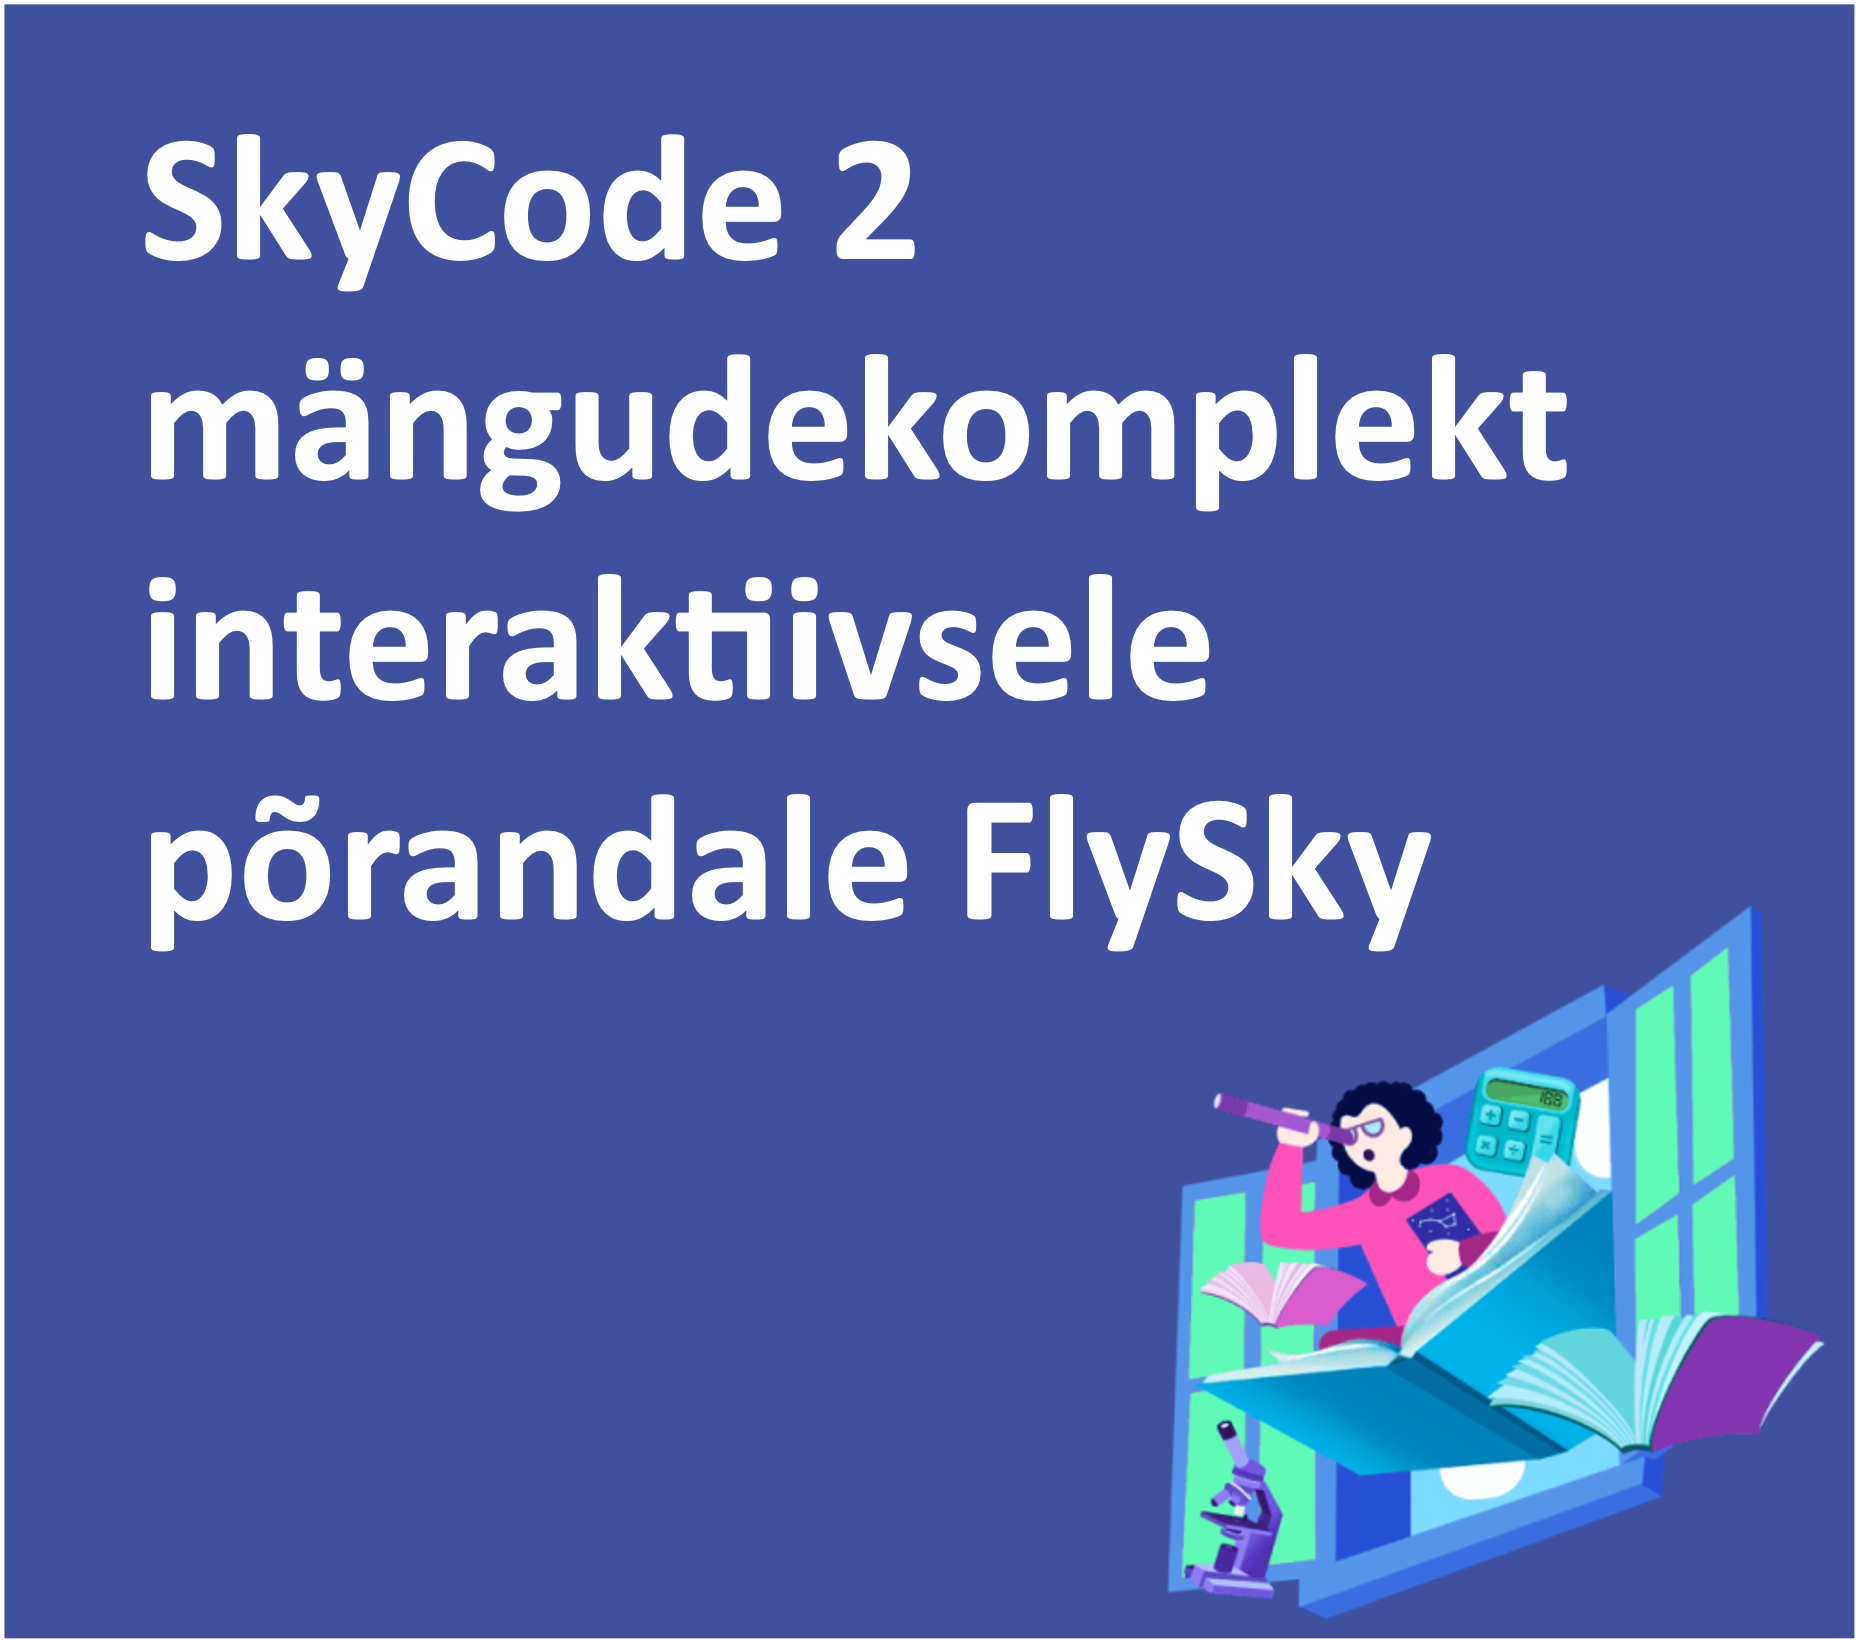 SkyCode 2 mängudekomplekt